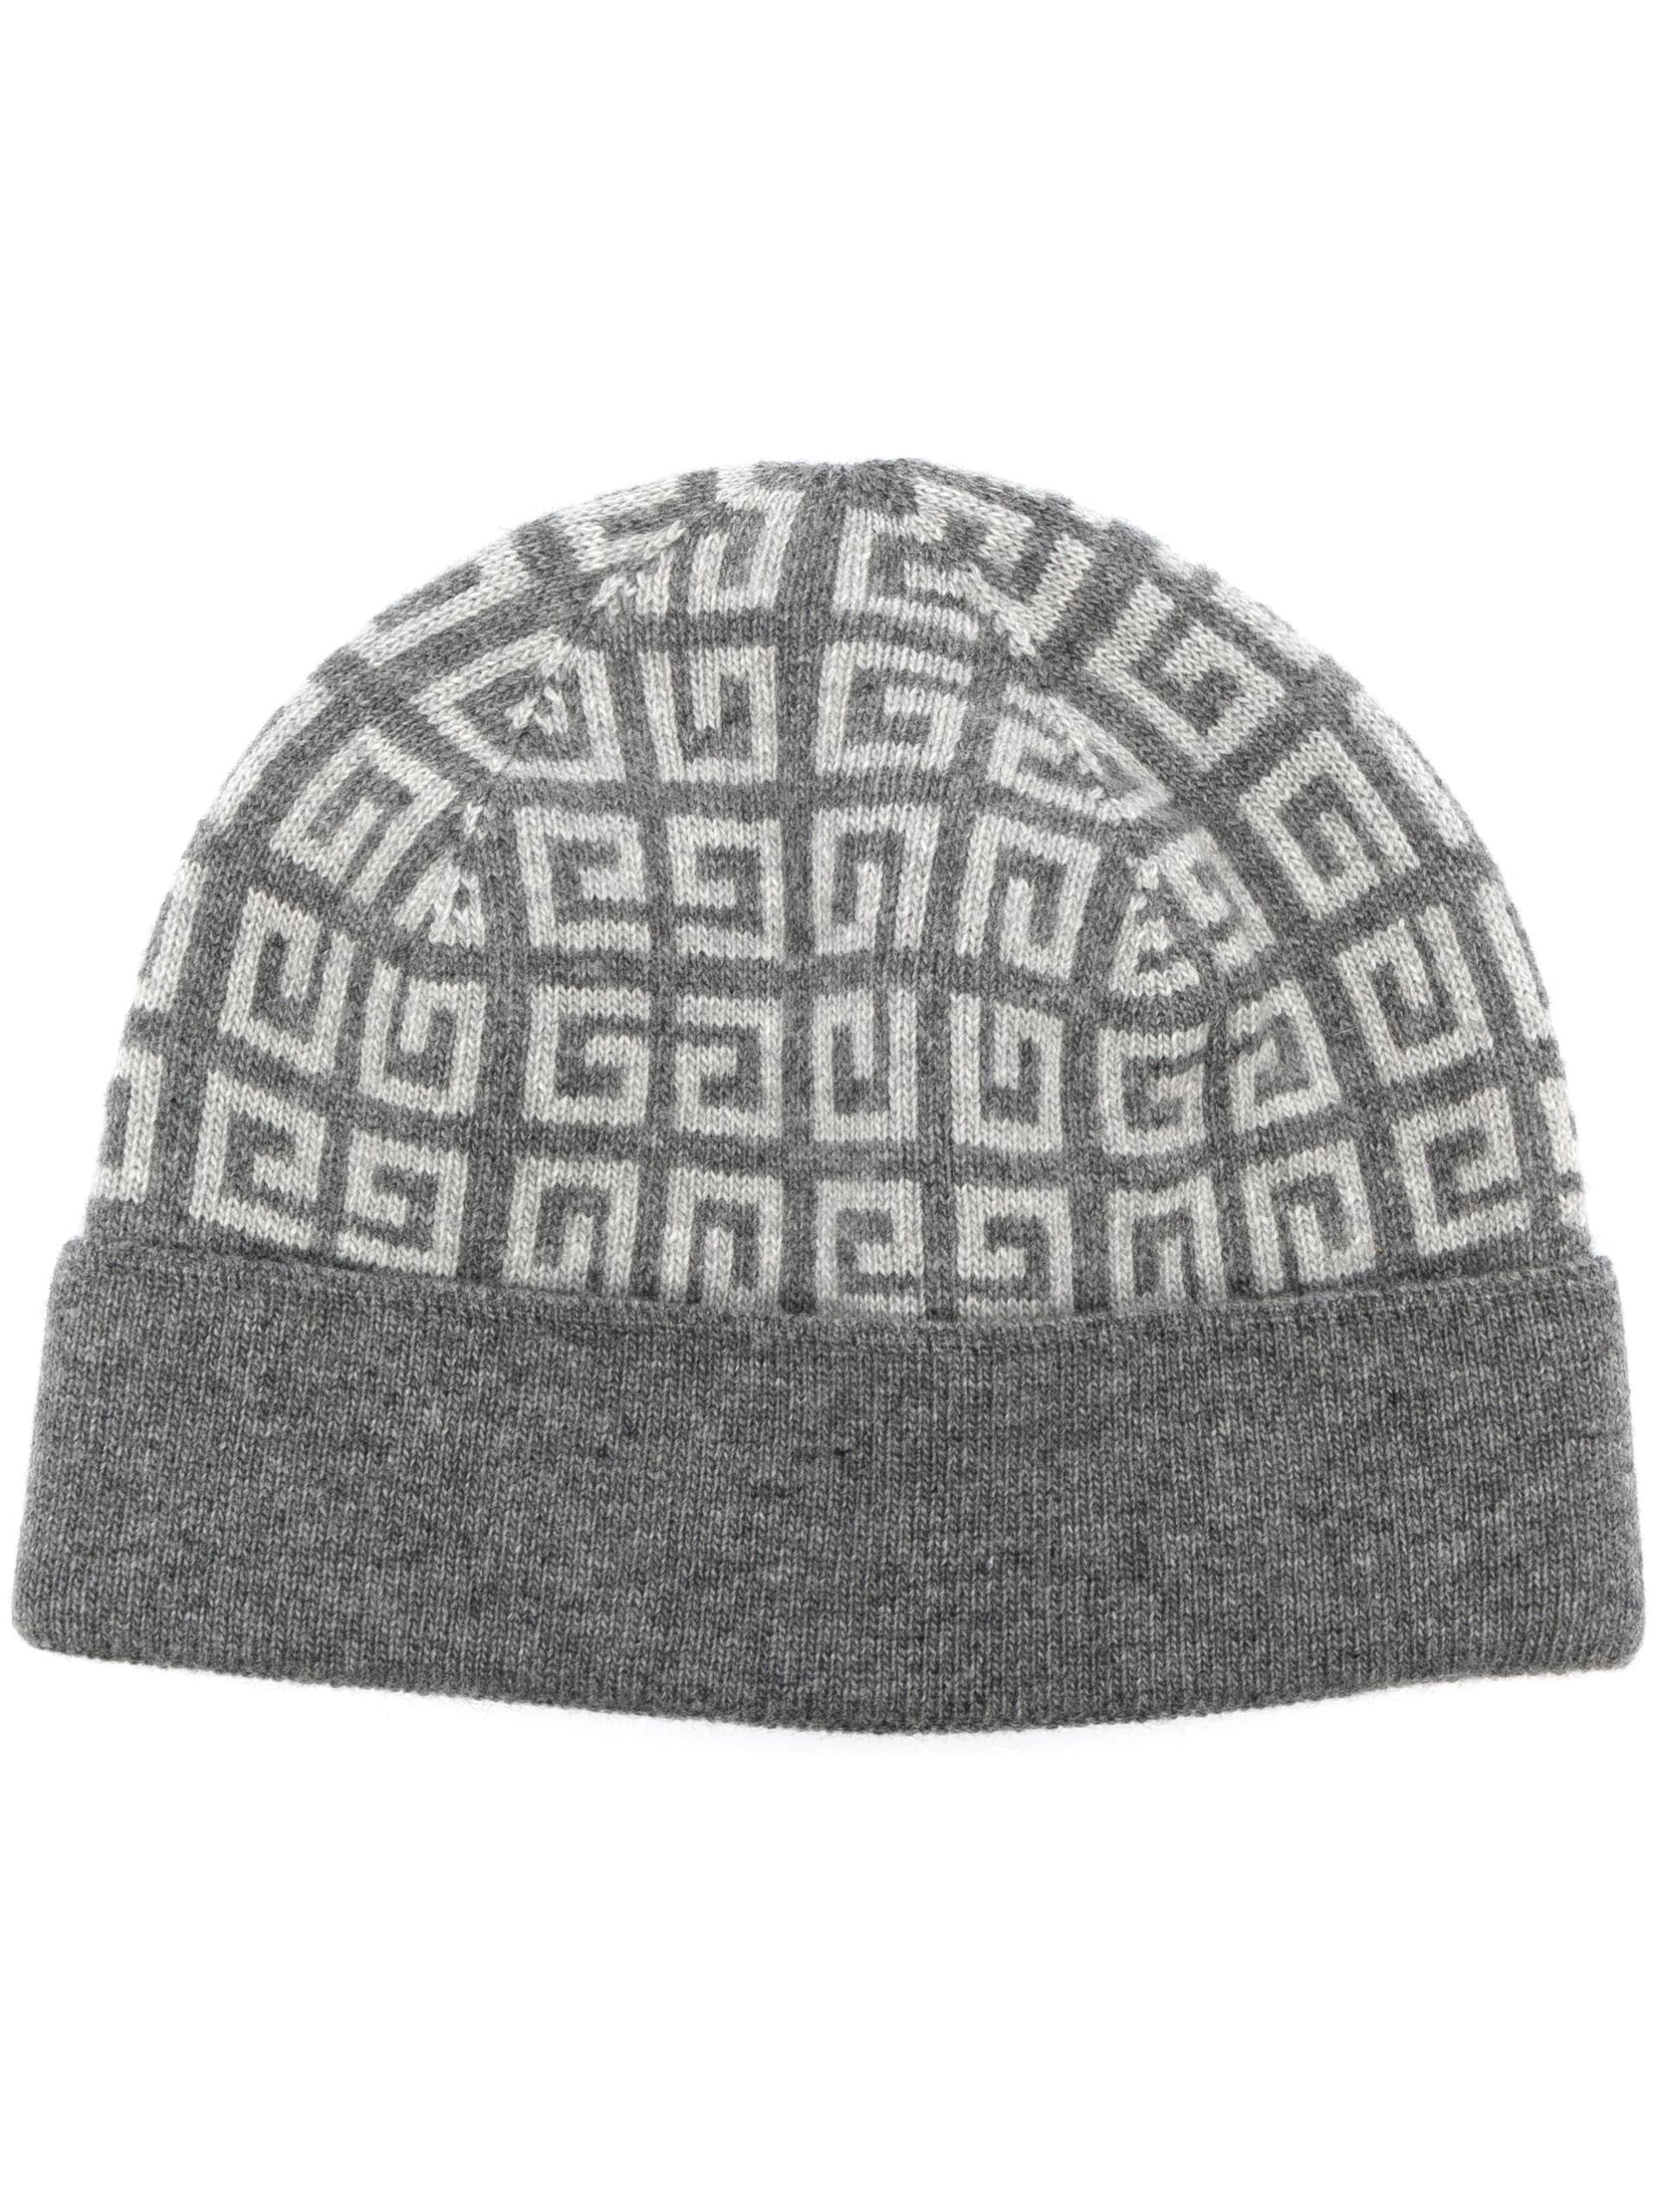 grey 4G intarsia beanie hat - 1